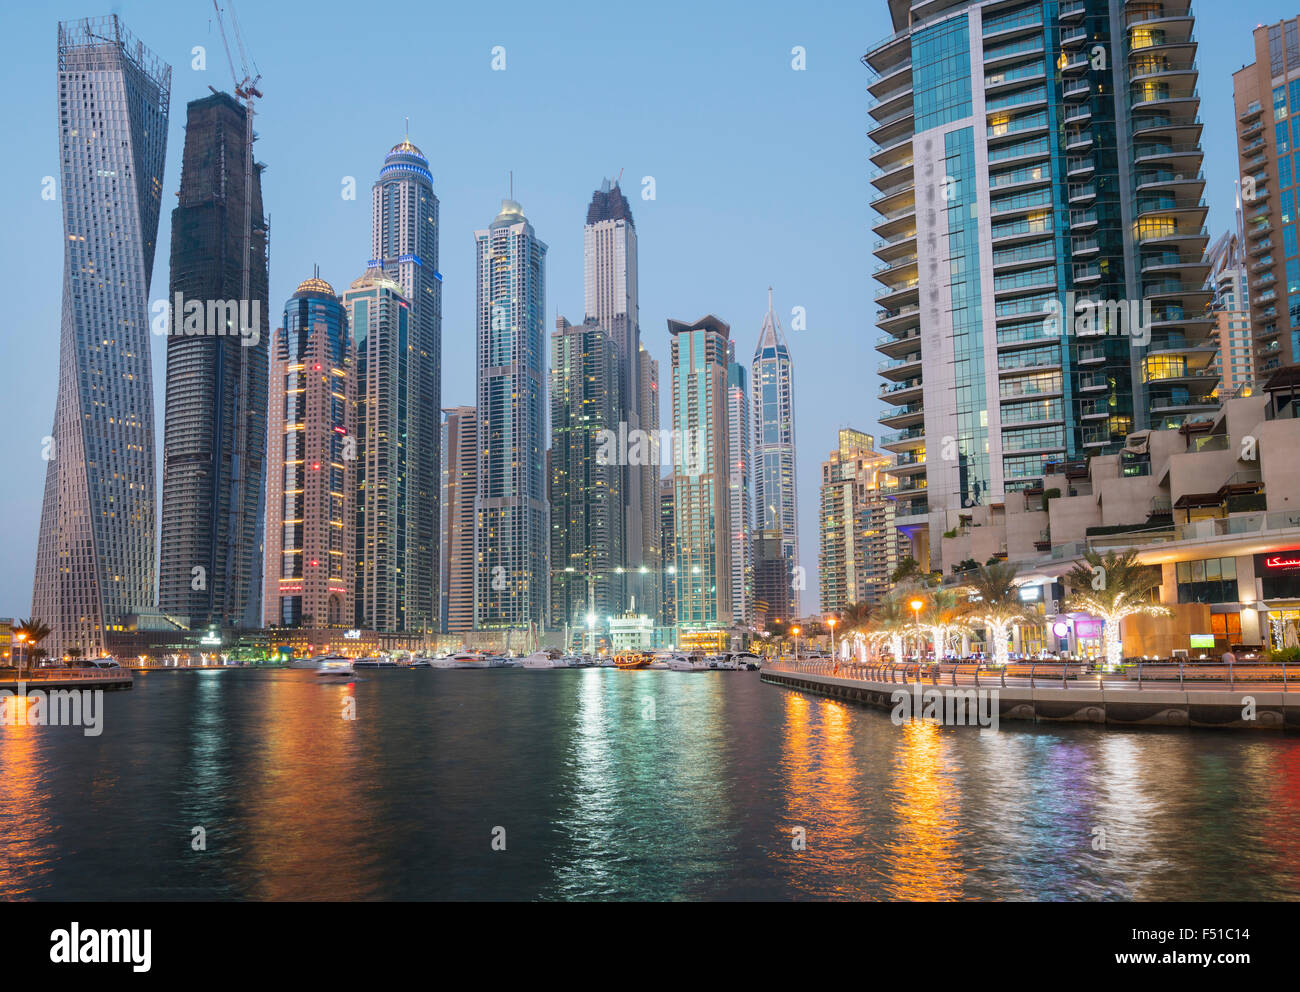 Skyline of skyscrapers  at night in  Marina district of Dubai United Arab Emirates Stock Photo